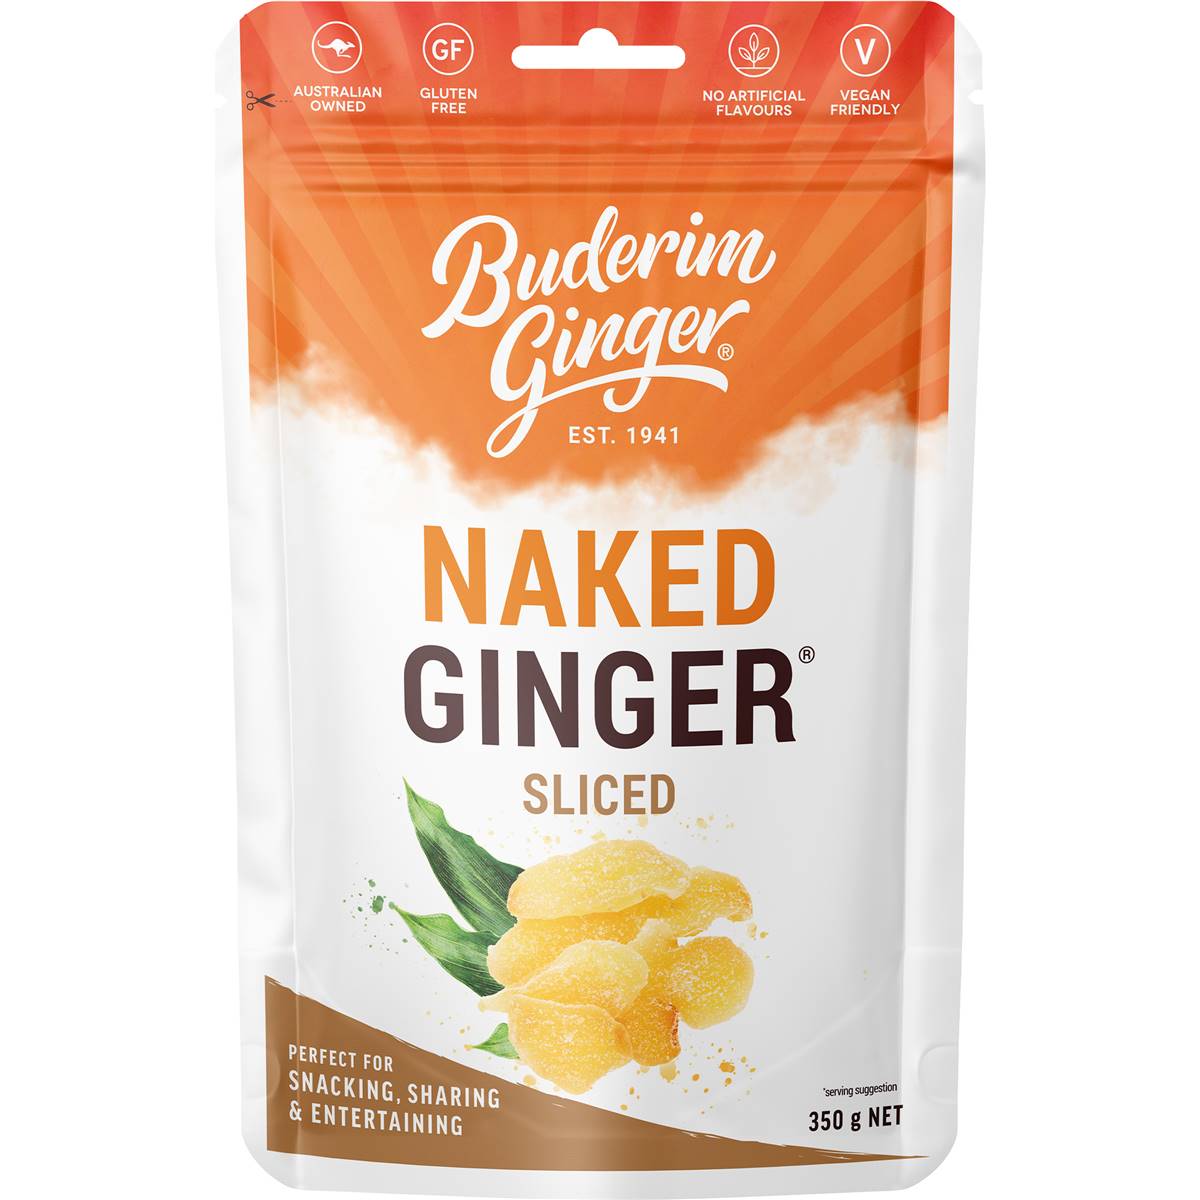 Calories in Buderim Ginger Sliced Naked Ginger